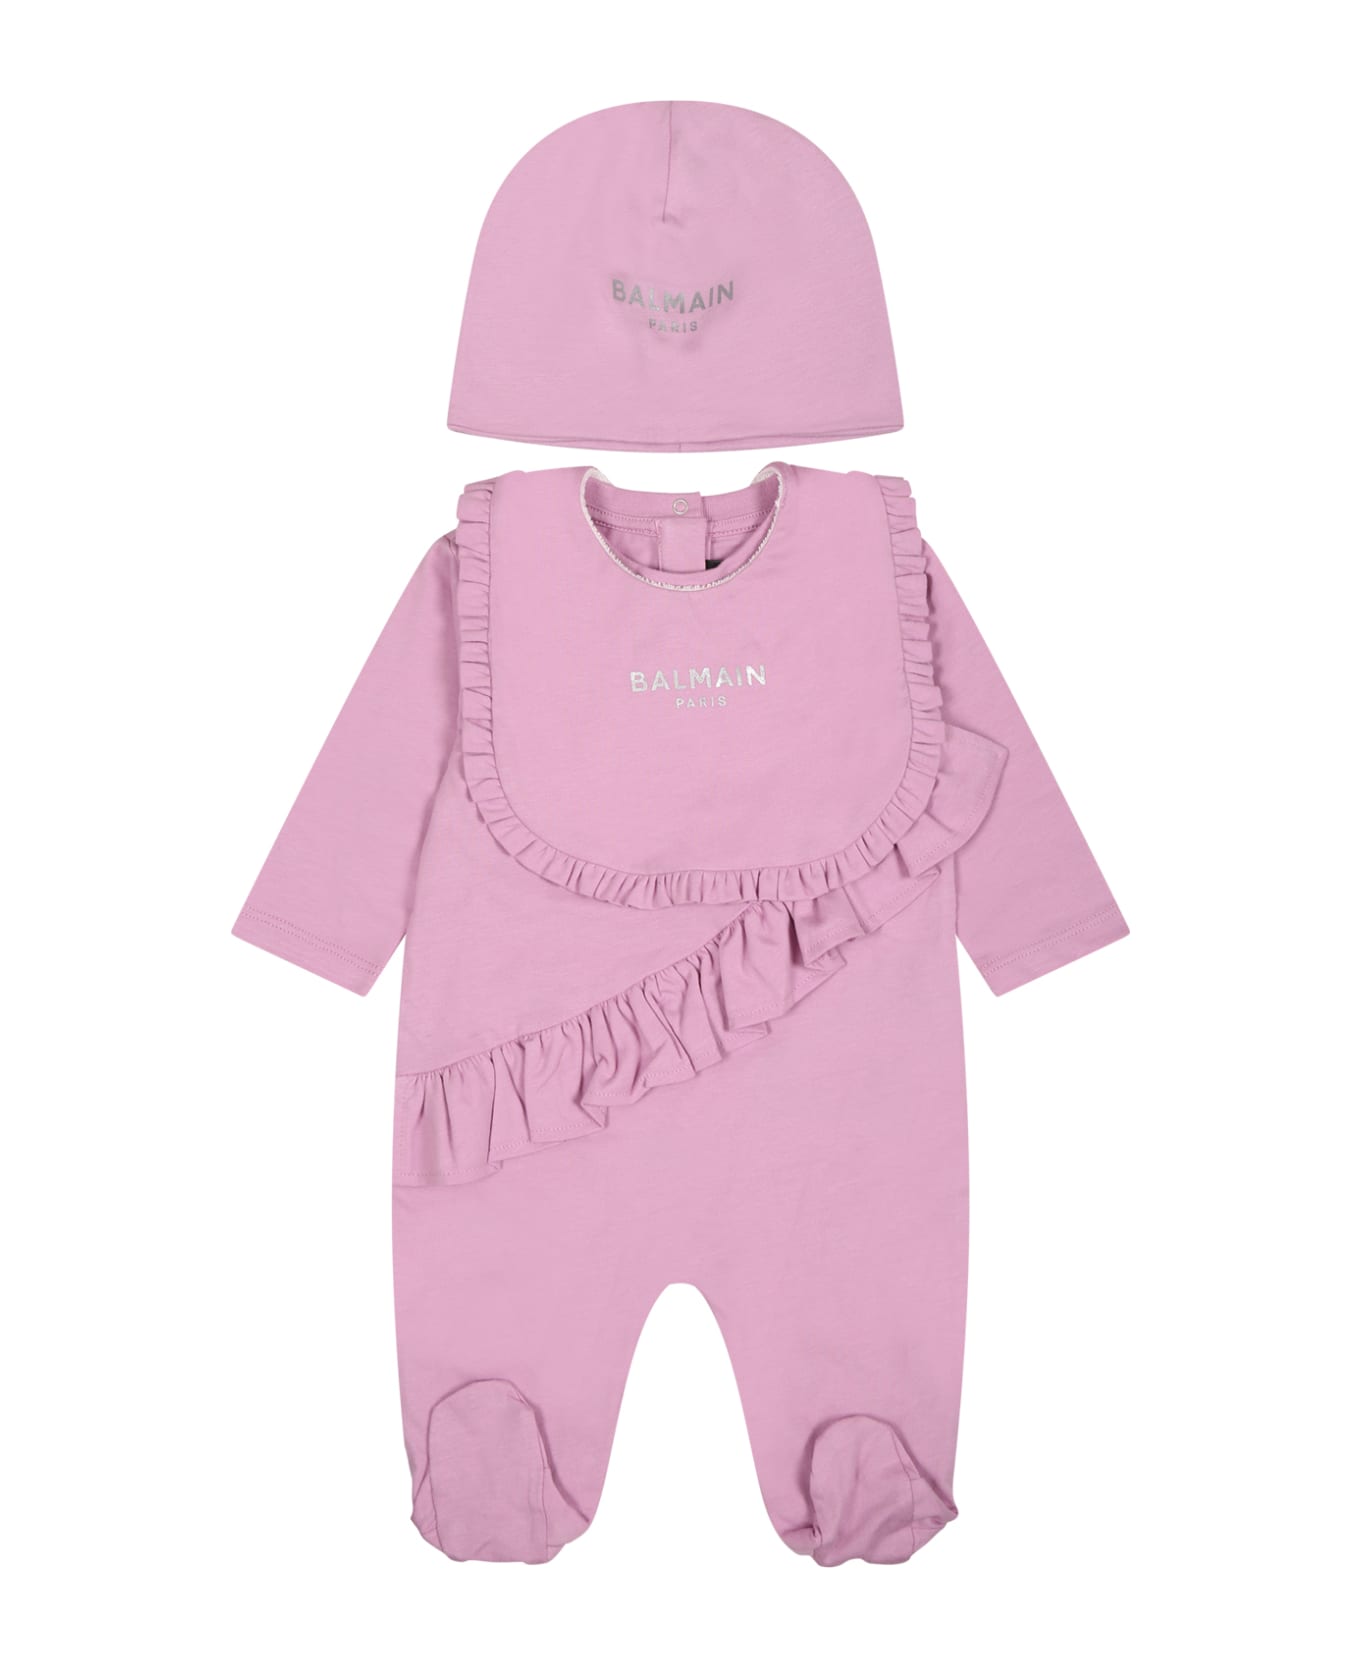 Balmain Purple Set For Baby Girl With Logo - Viola